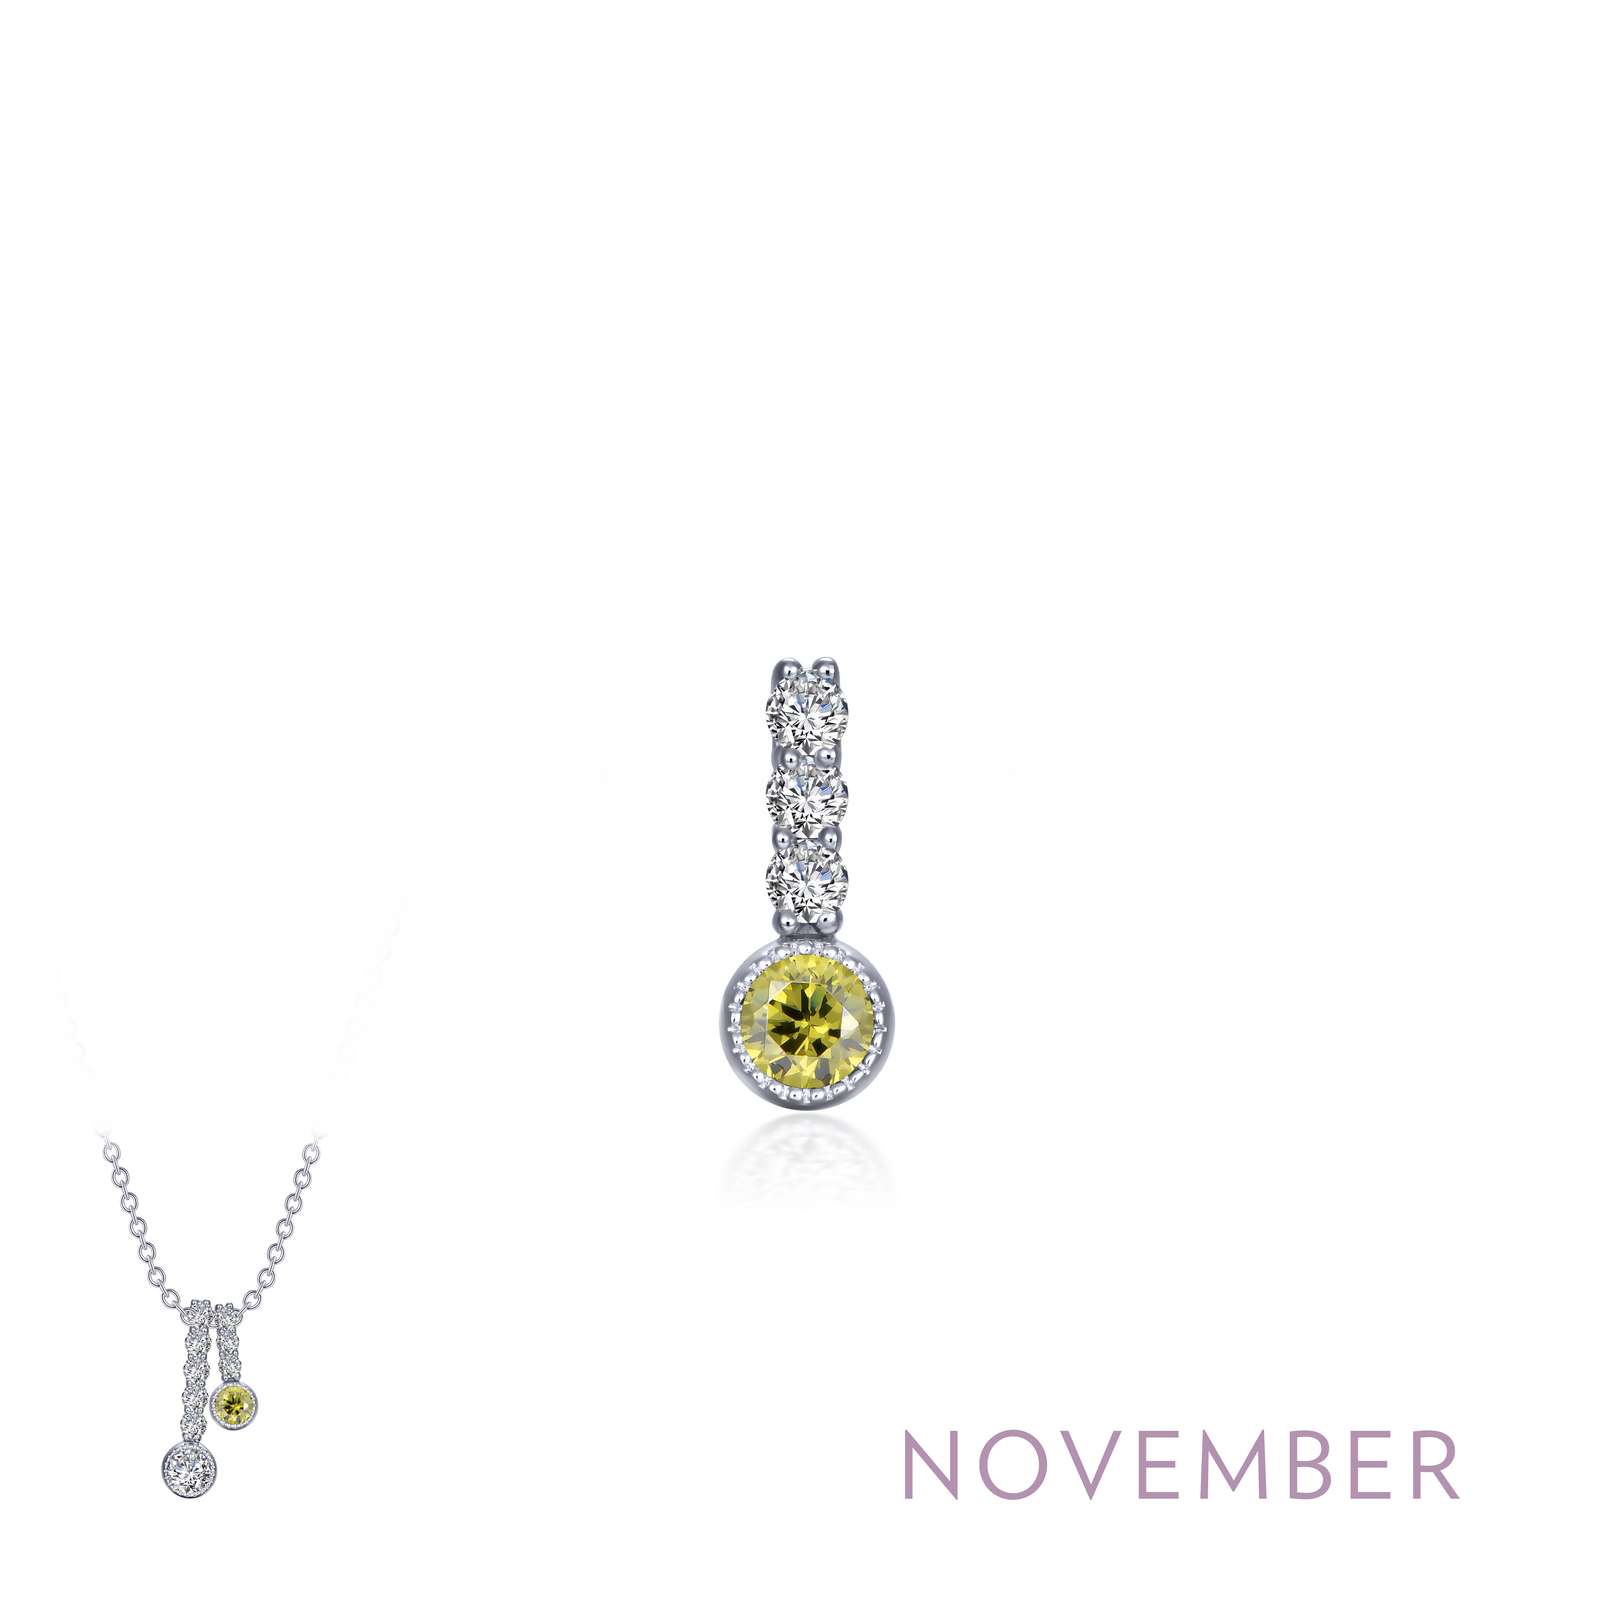 Birthstone November Platinum Bonded Necklace Diamond Shop Ada, OK